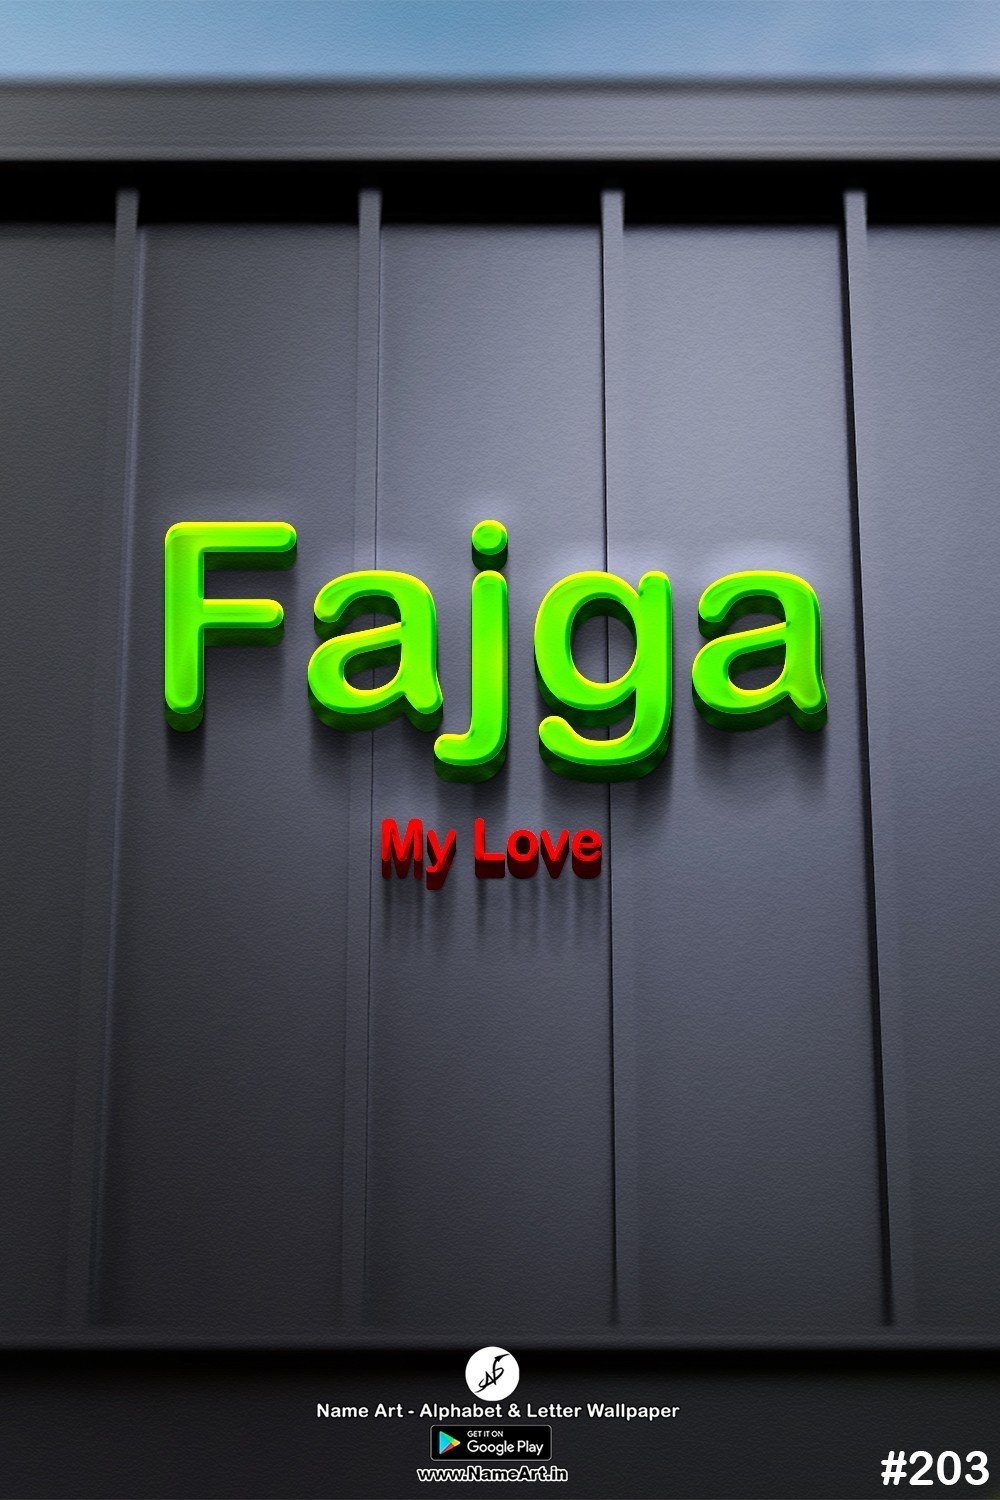 Fajga | Whatsapp Status Fajga | Happy Birthday Fajga !! | New Whatsapp Status Fajga Images |